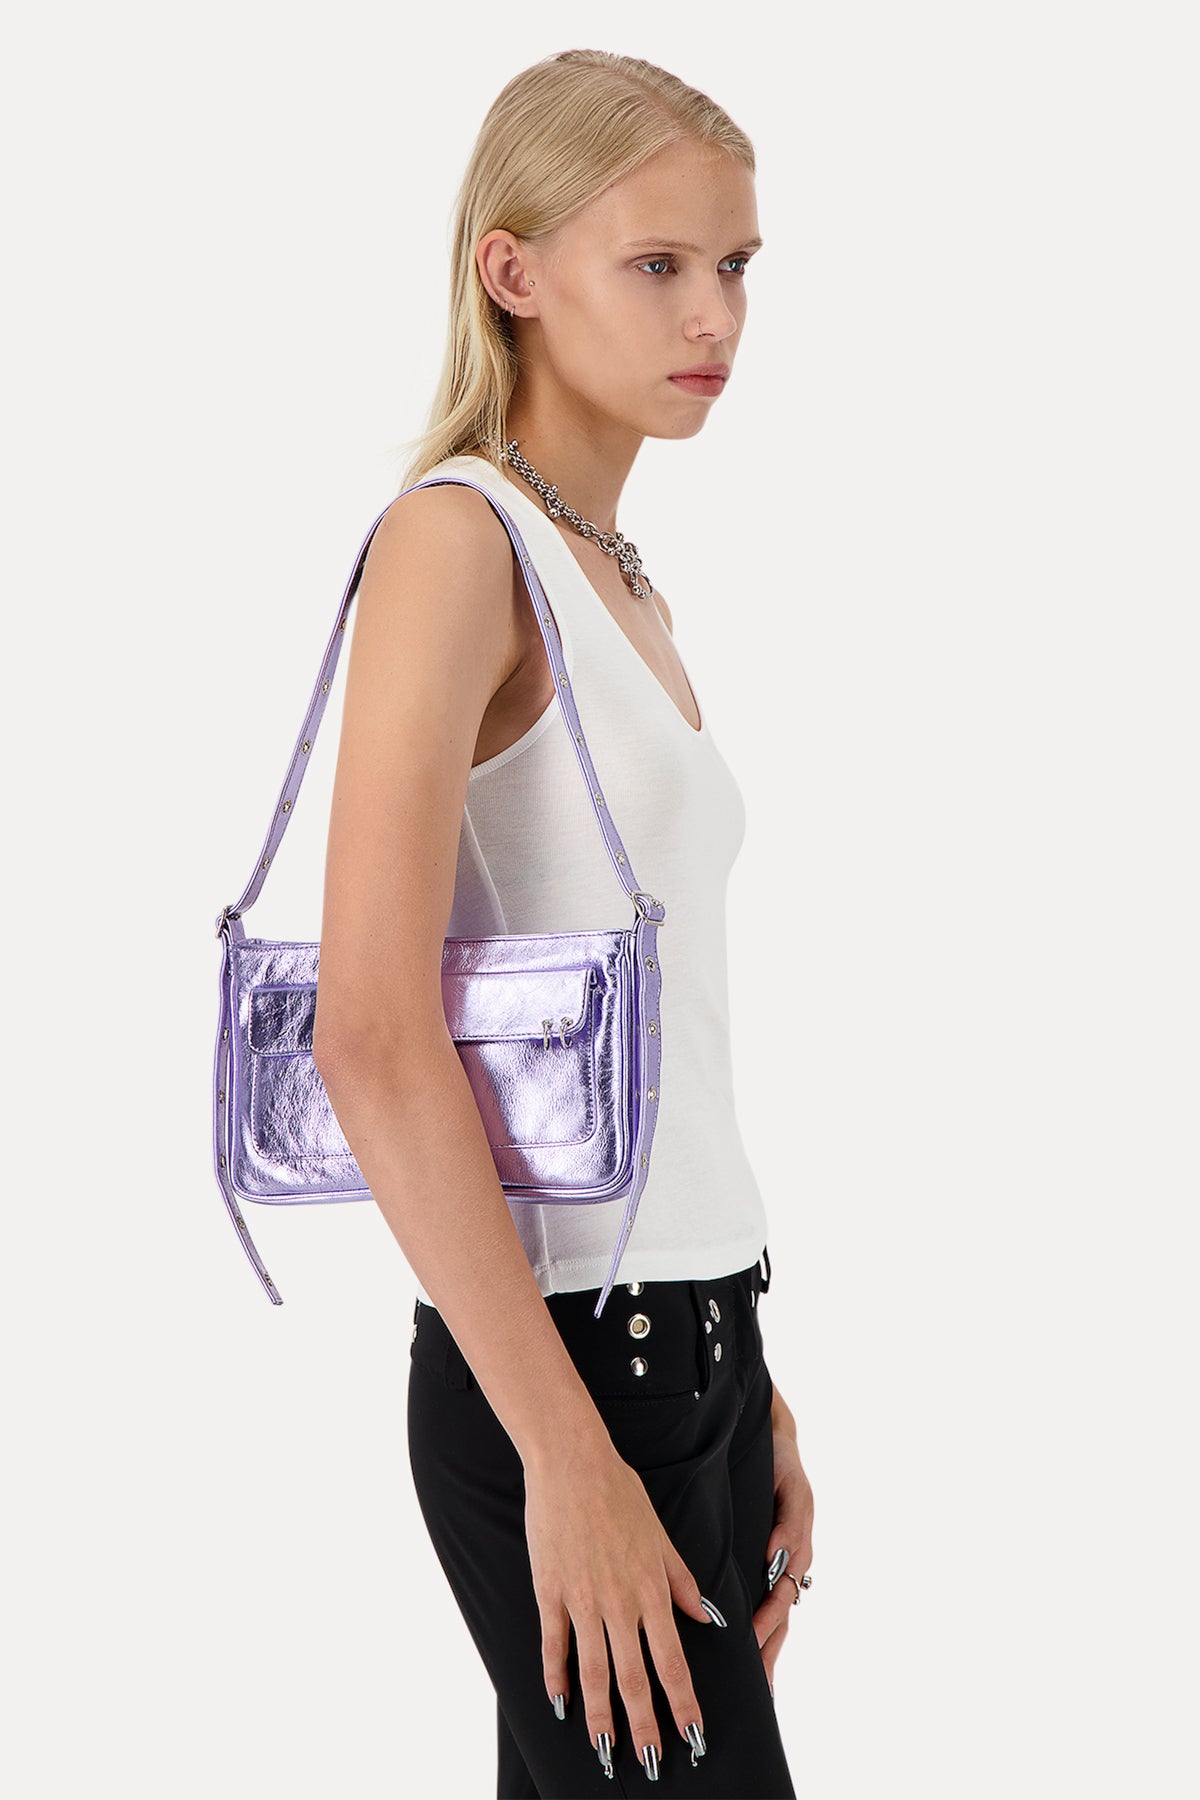 Jim purple bag